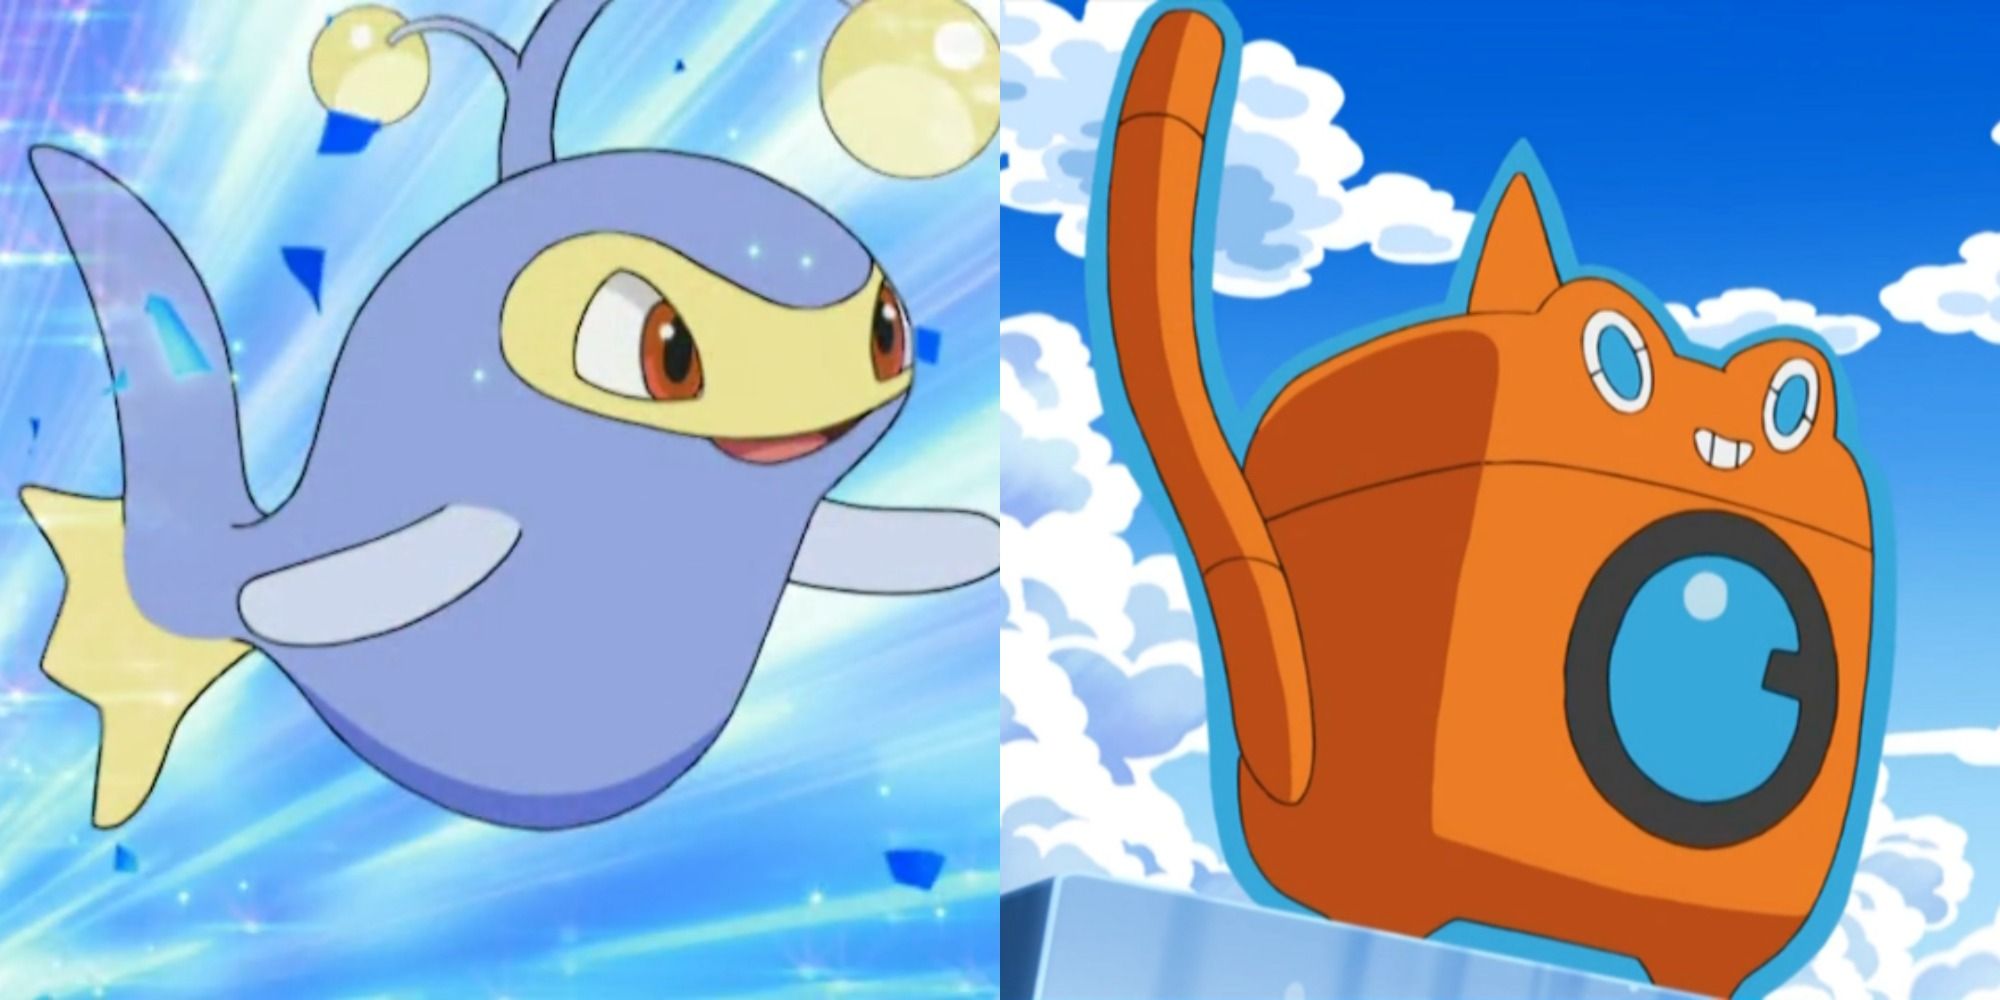 Split image showing Lanturn and Wash Rotom in the Pokémon anime